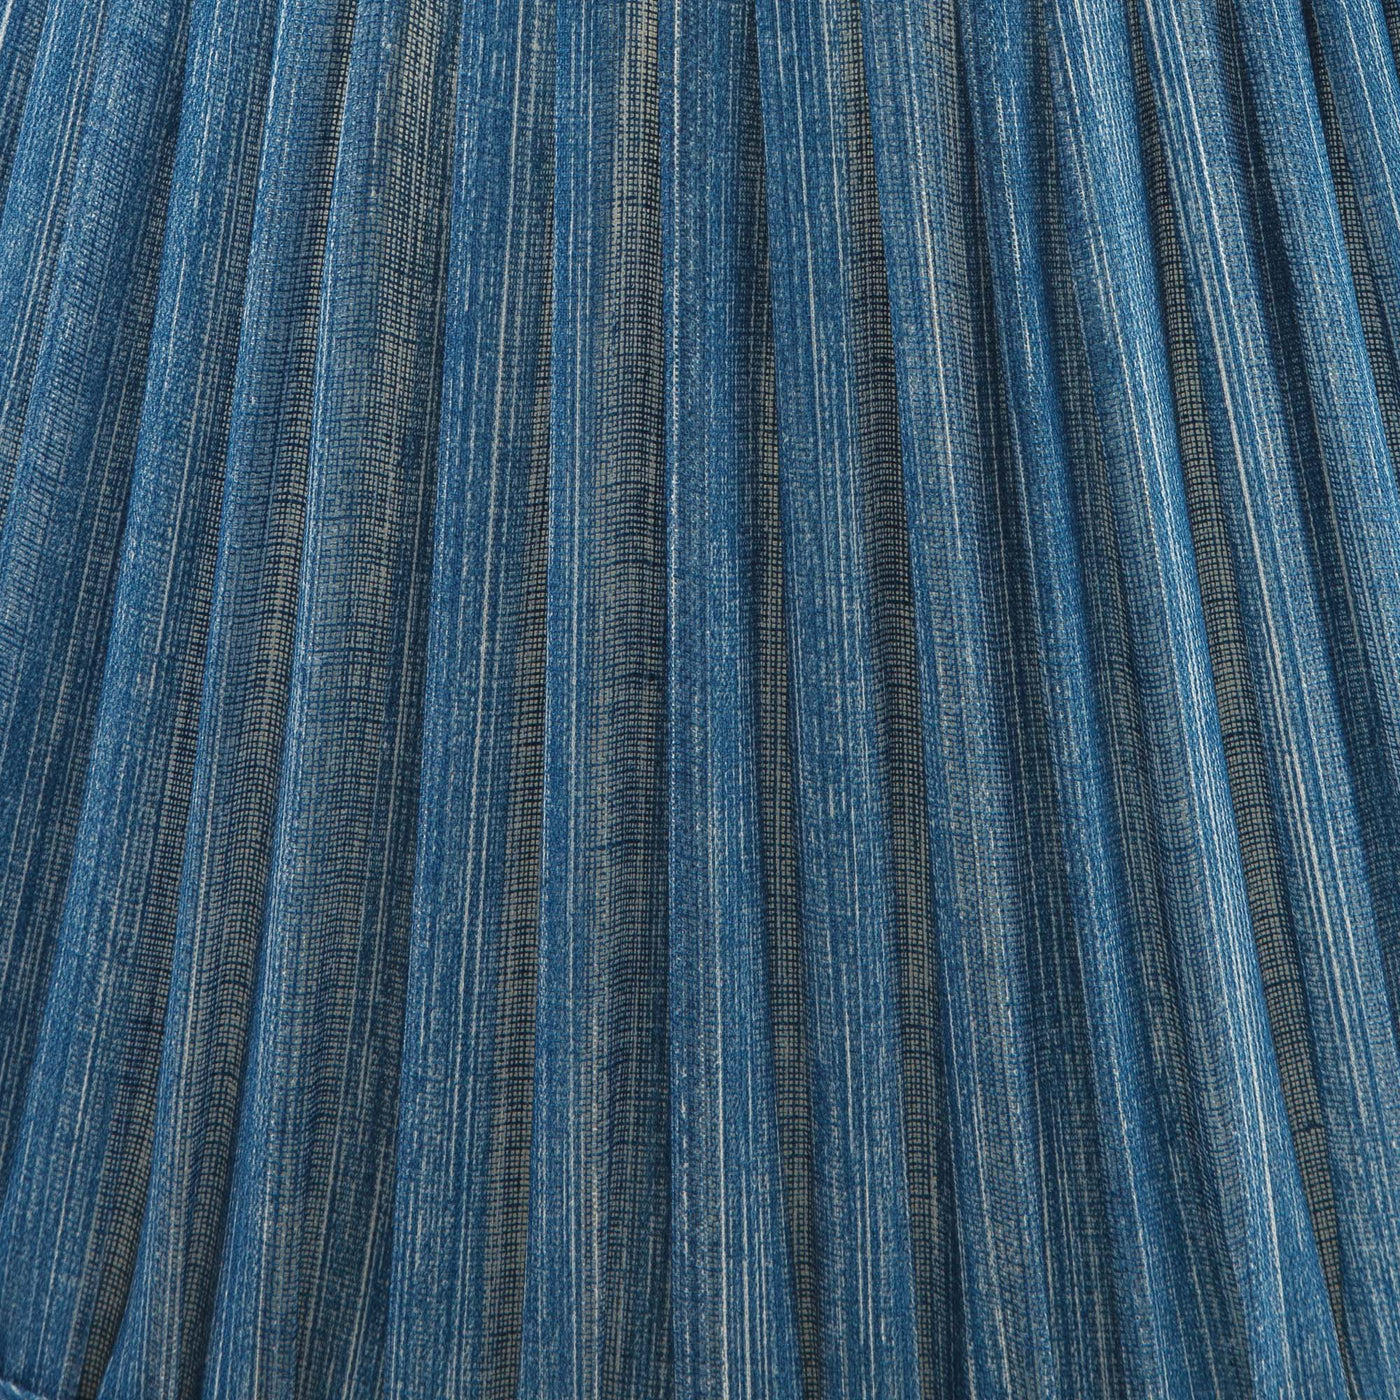 18" Fermoie Lampshade - Plain Linen in Sacre Bleu  | Newport Lamp And Shade | Located in Newport, RI